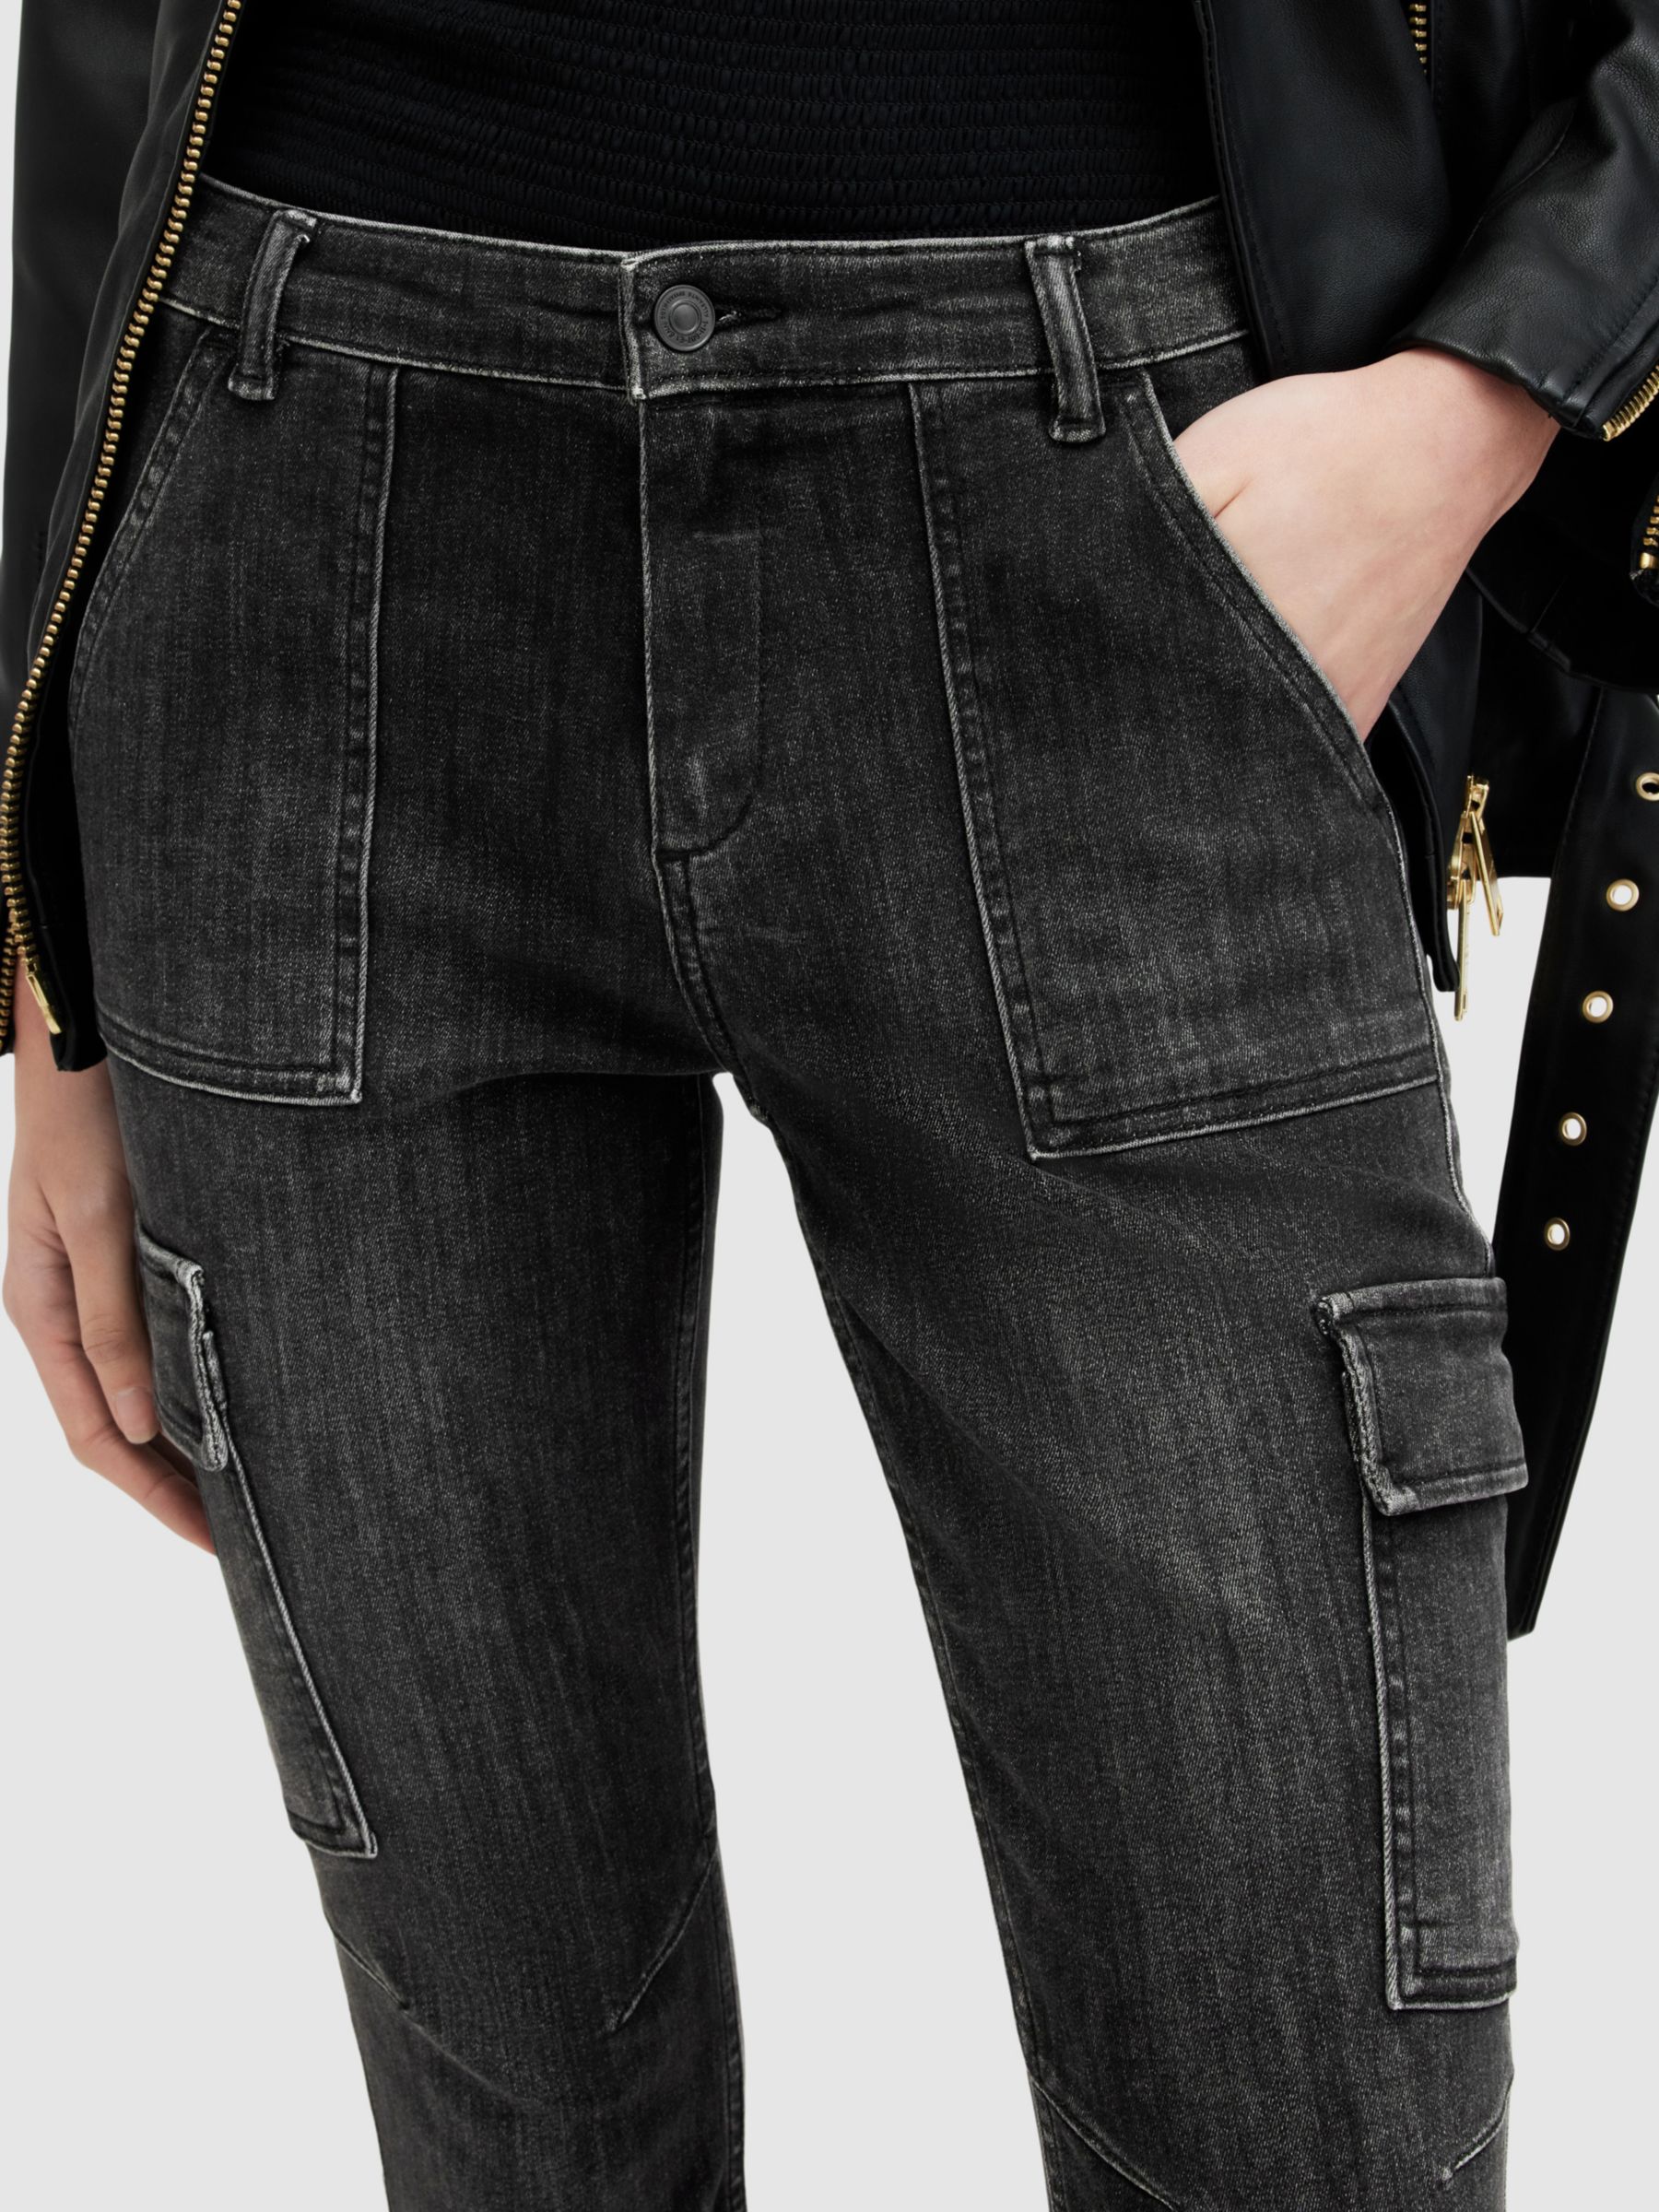 AllSaints Duran Cargo Jeans, Washed Black, 29